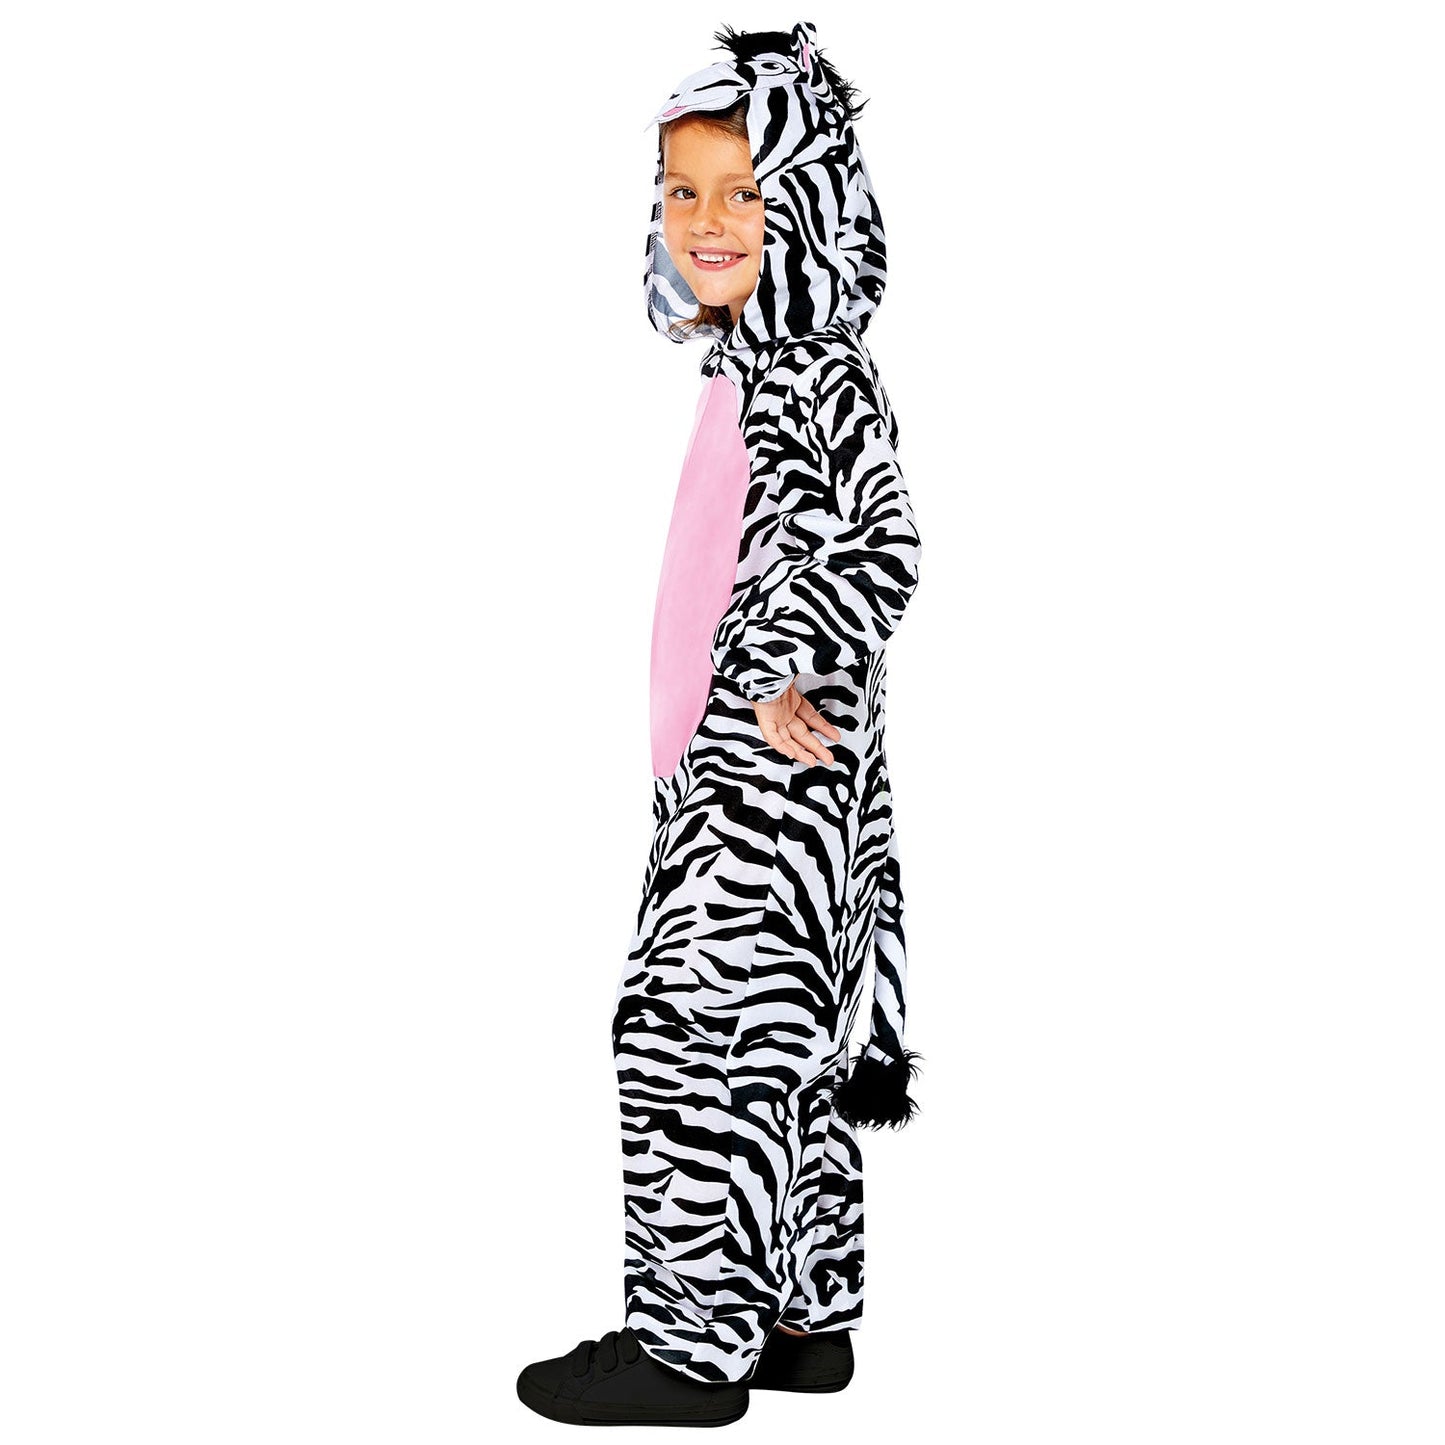 Zebra Onesie Costume includes jumpsuit with hood